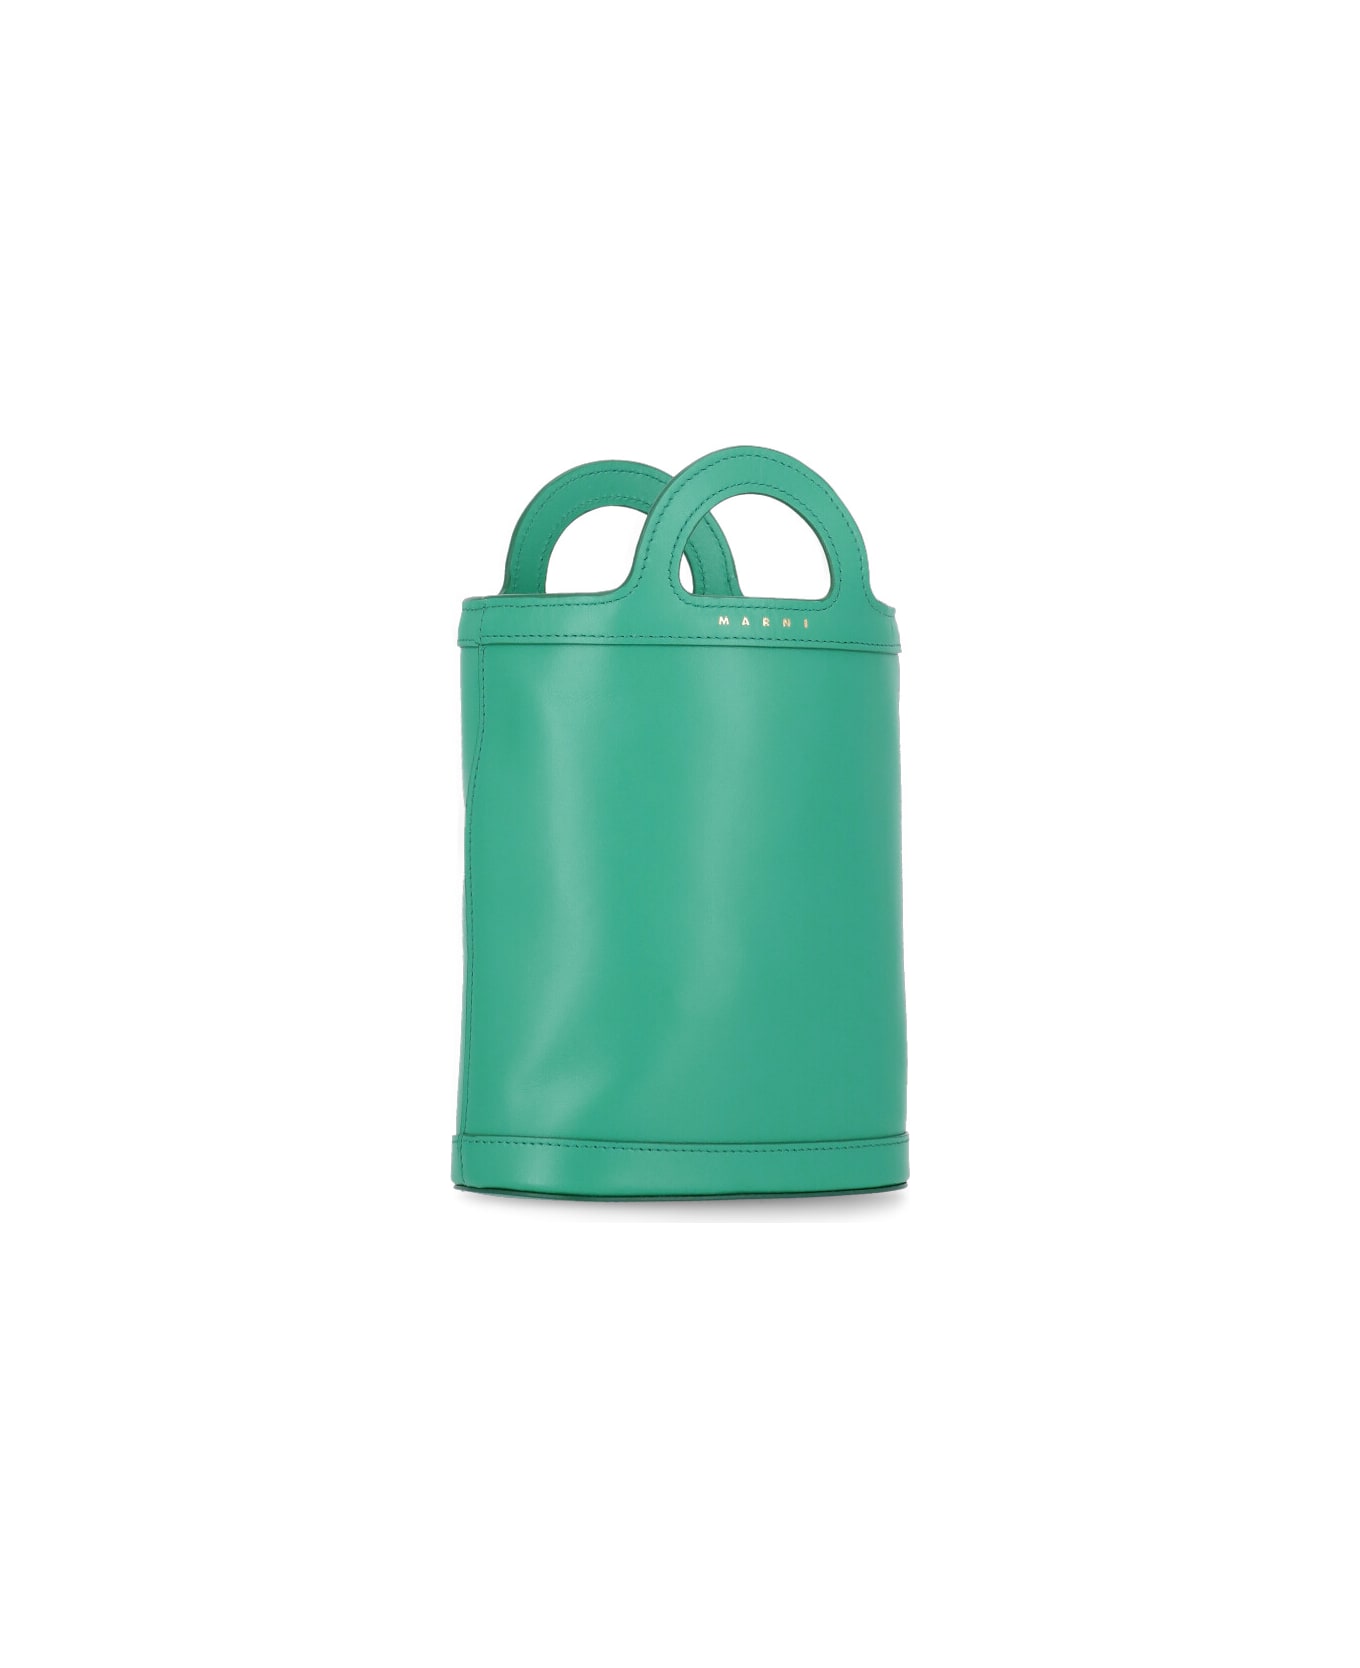 Marni Leather Hand Bag - Green トートバッグ